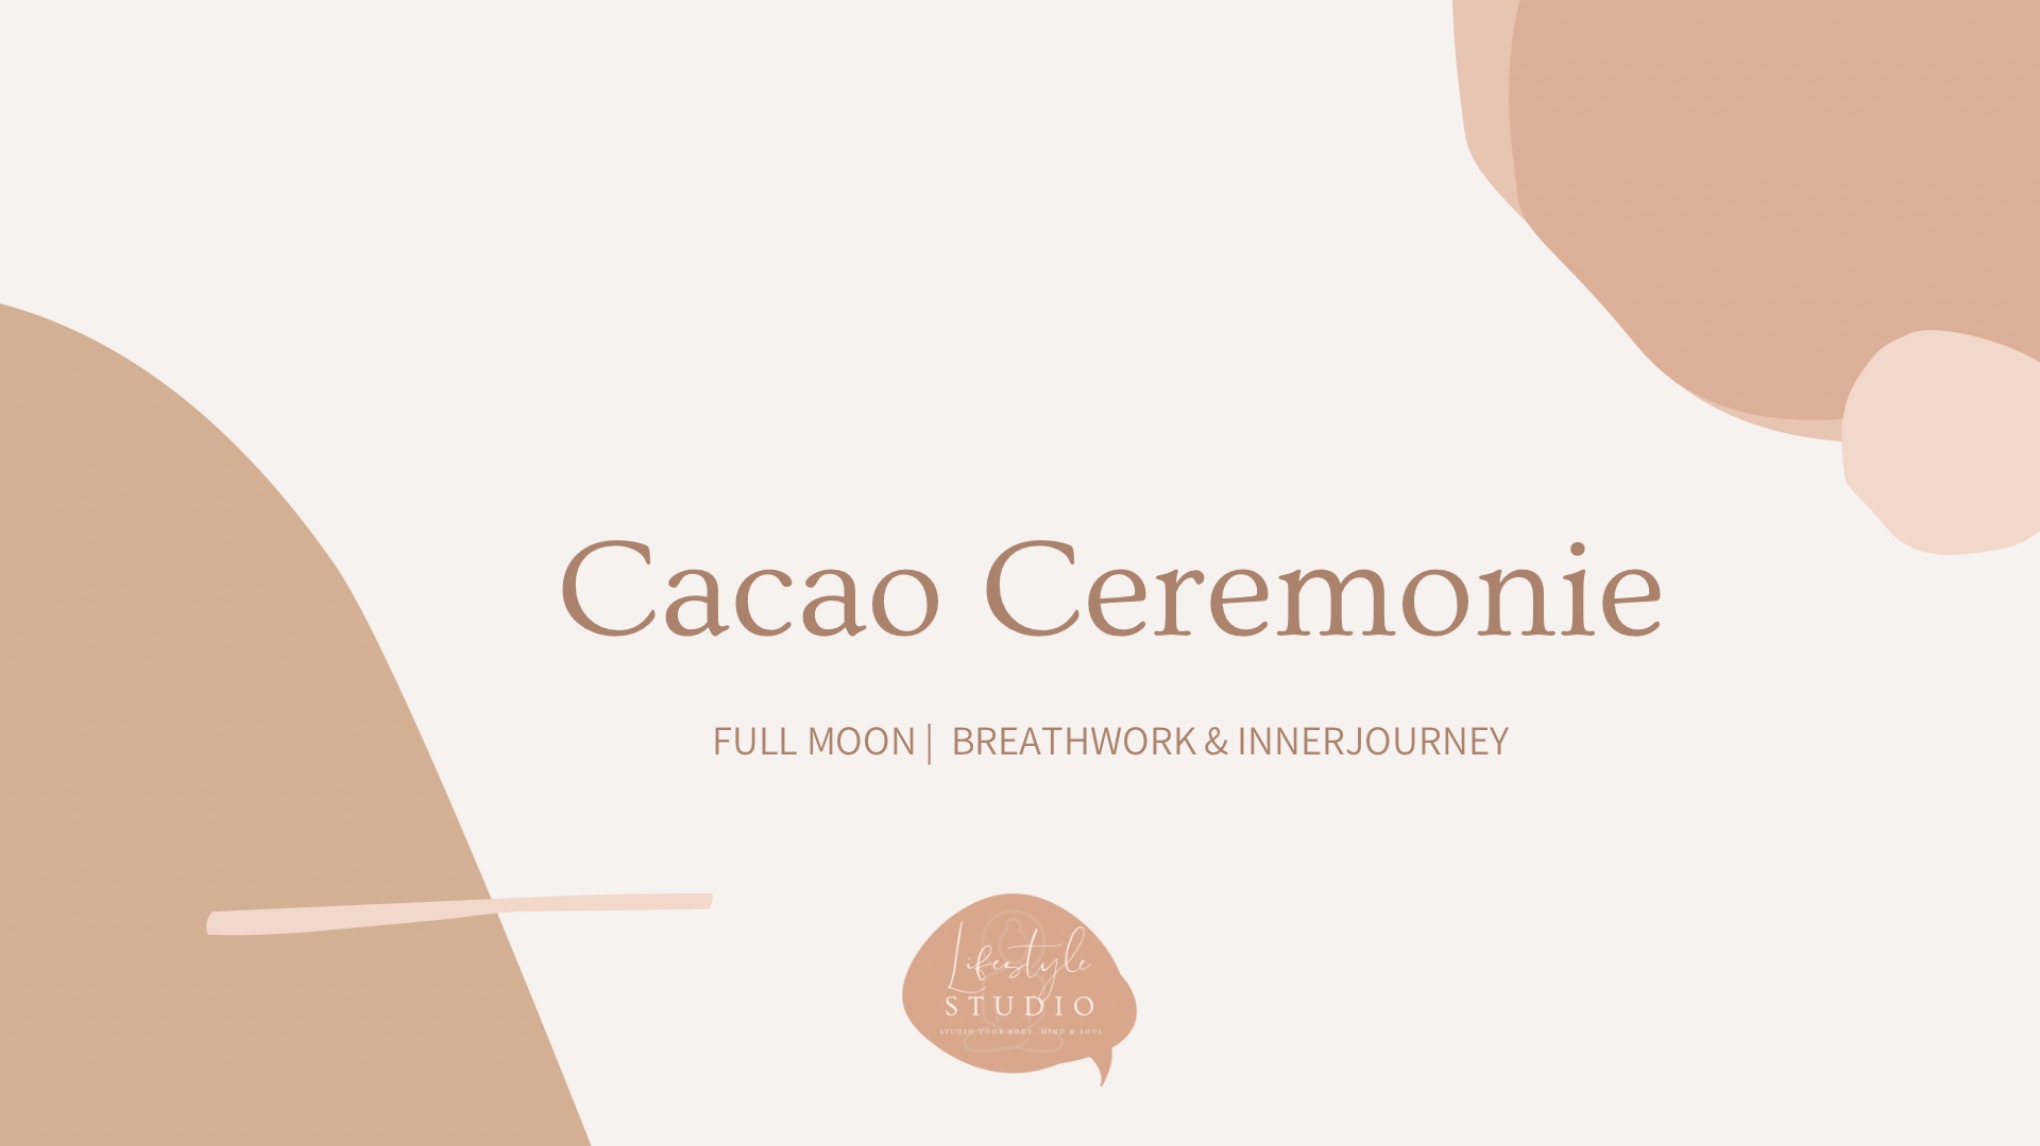 Cacao Ceremonie & Innerjourney